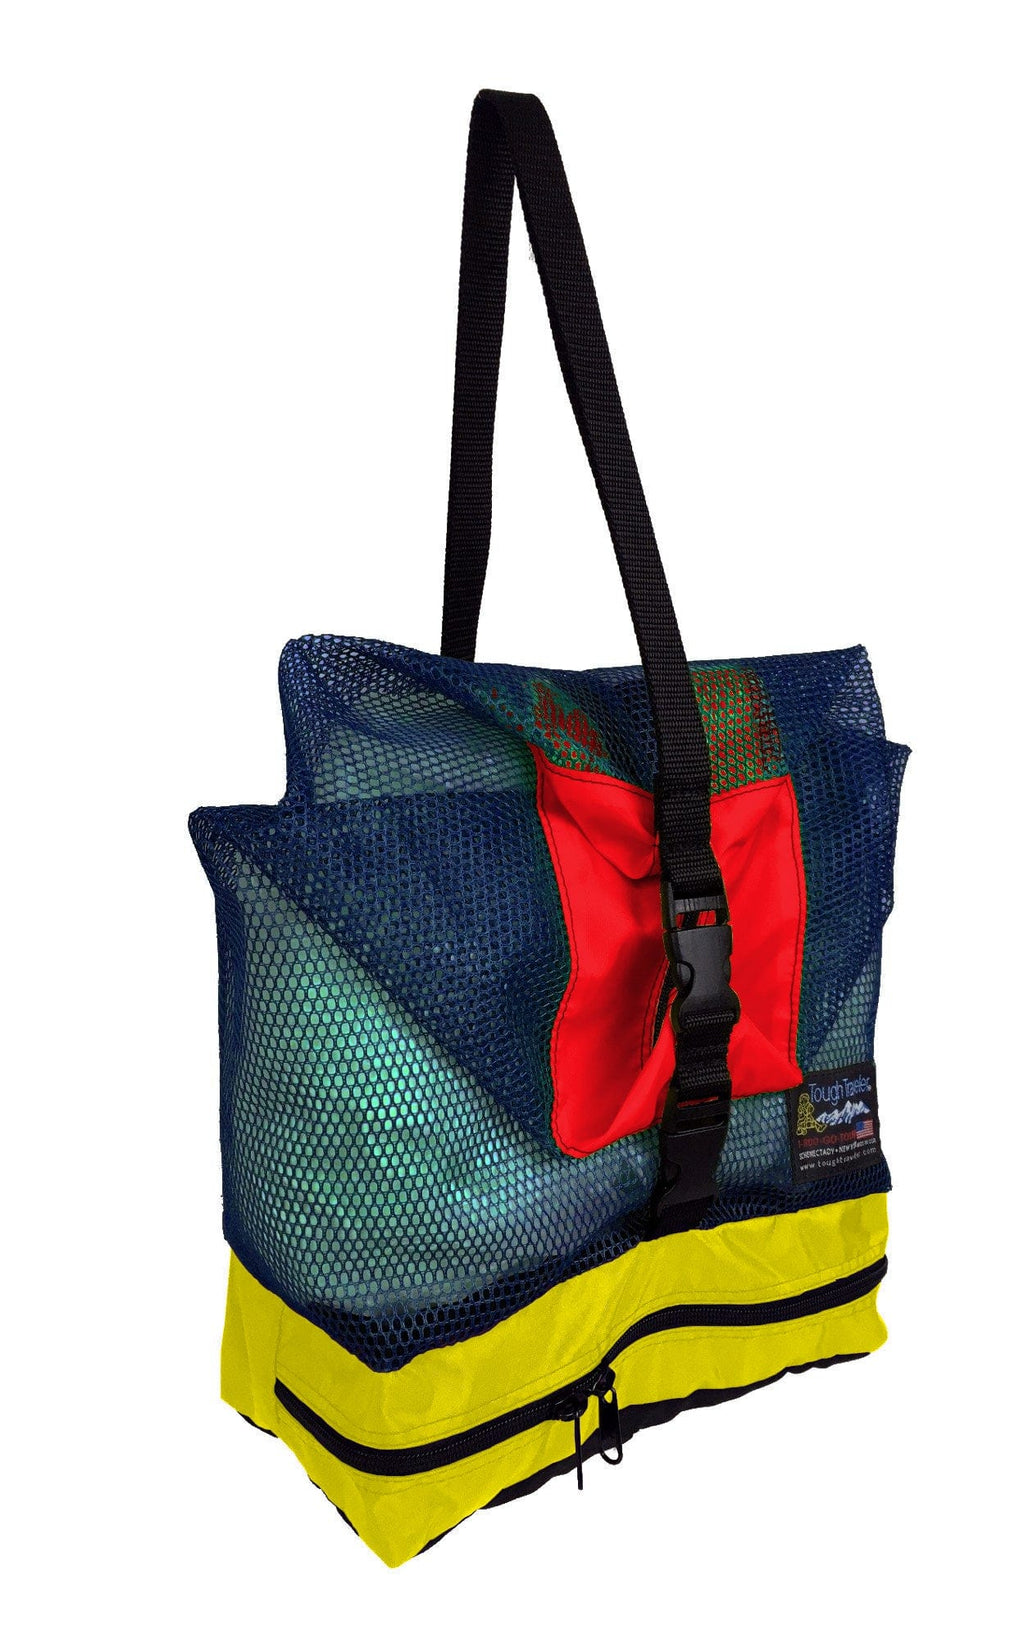 L.L Bean Tote Bag Camo design.. Two Way Bag.. Vintage Tote Bag..